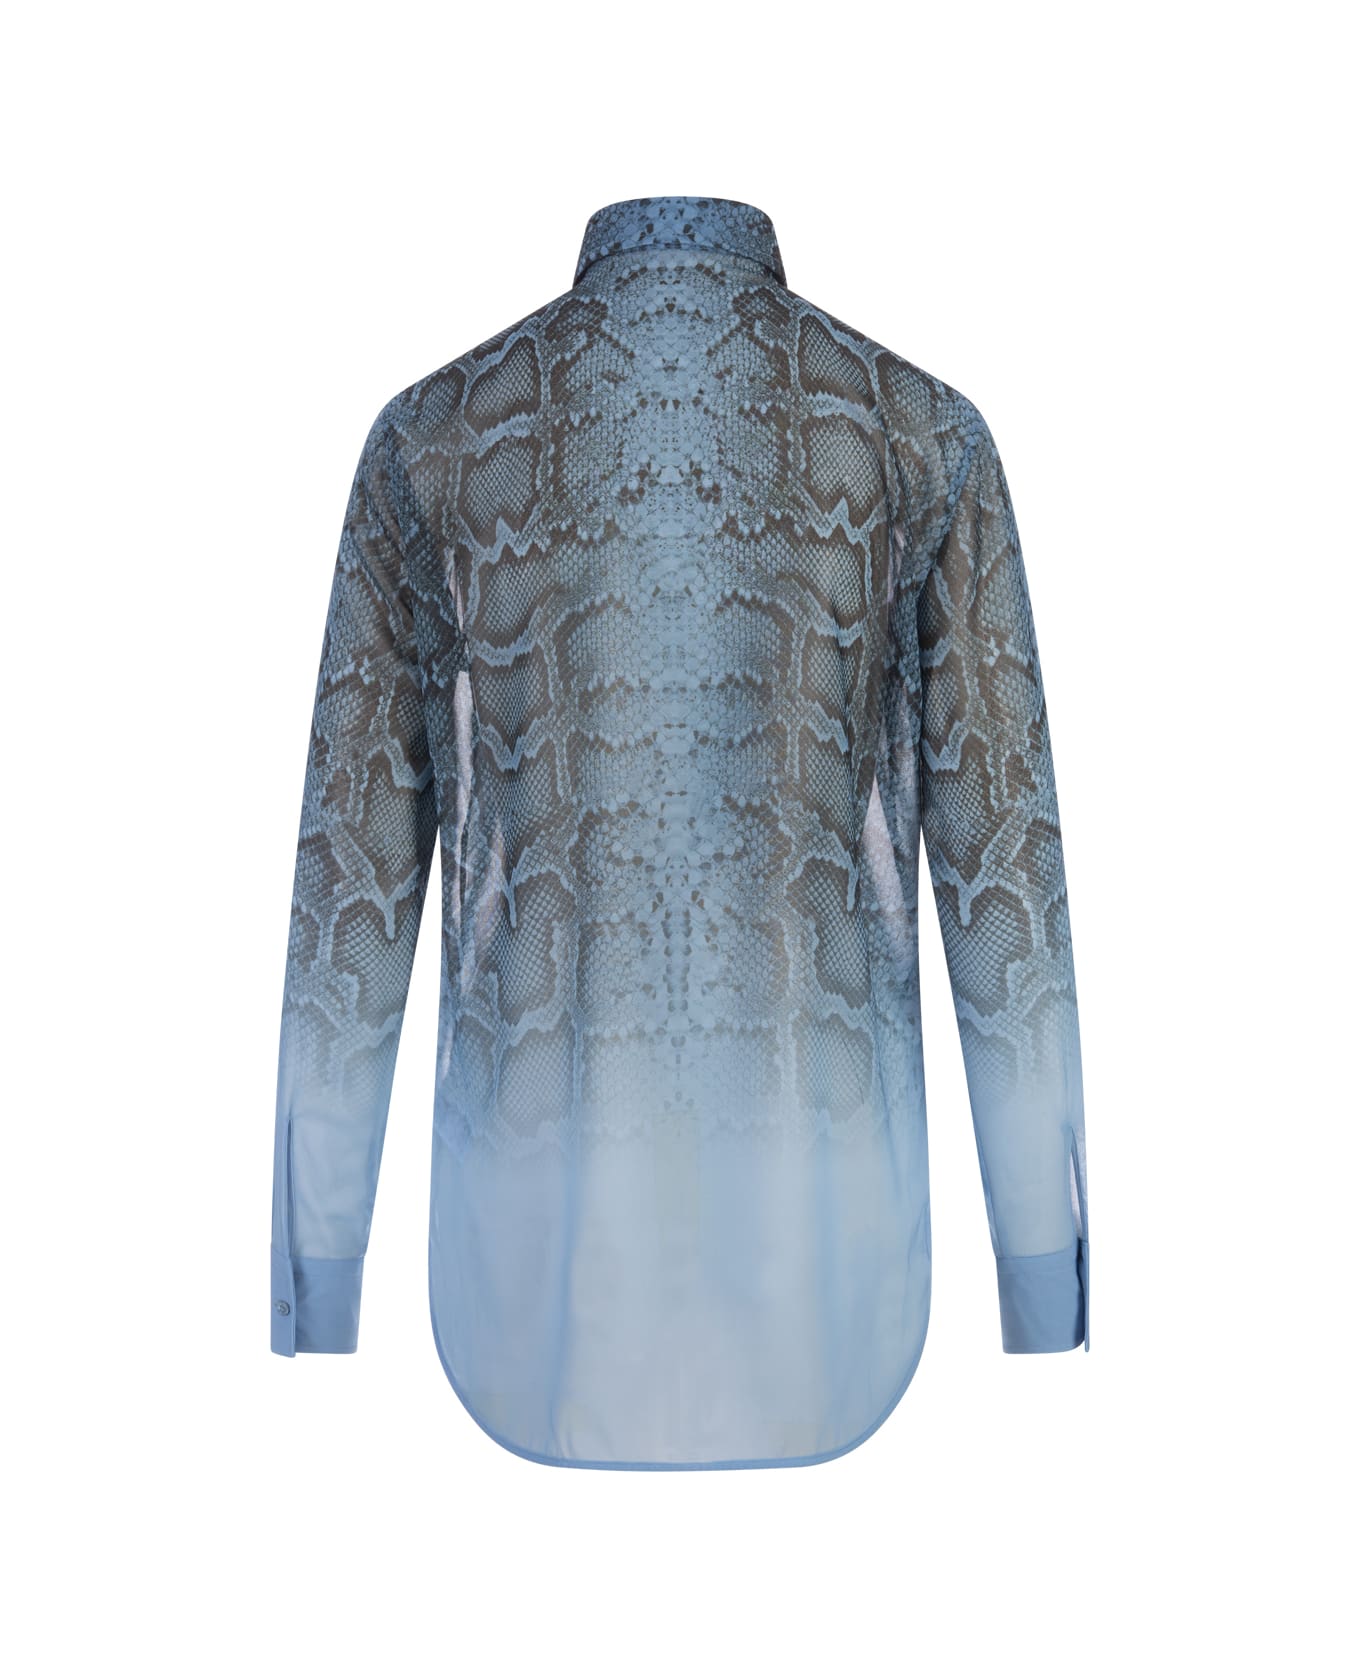 Ermanno Scervino Blue Shirt With Ruffles And Degradé Python Print - Blue シャツ